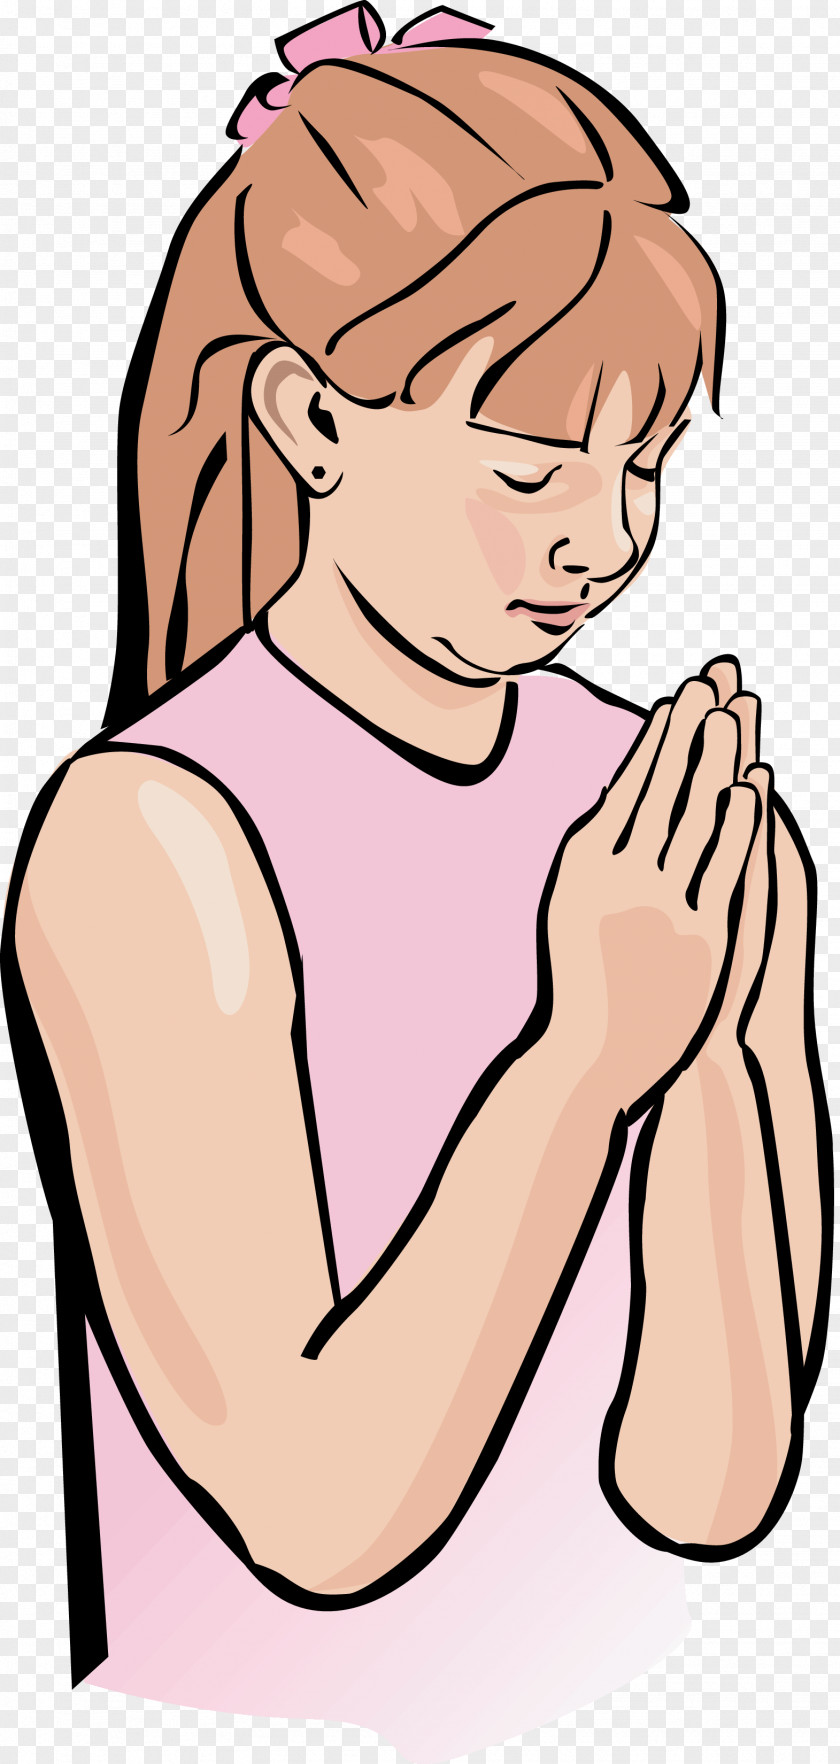 Free Prayer Clipart Praying Hands Clip Art PNG